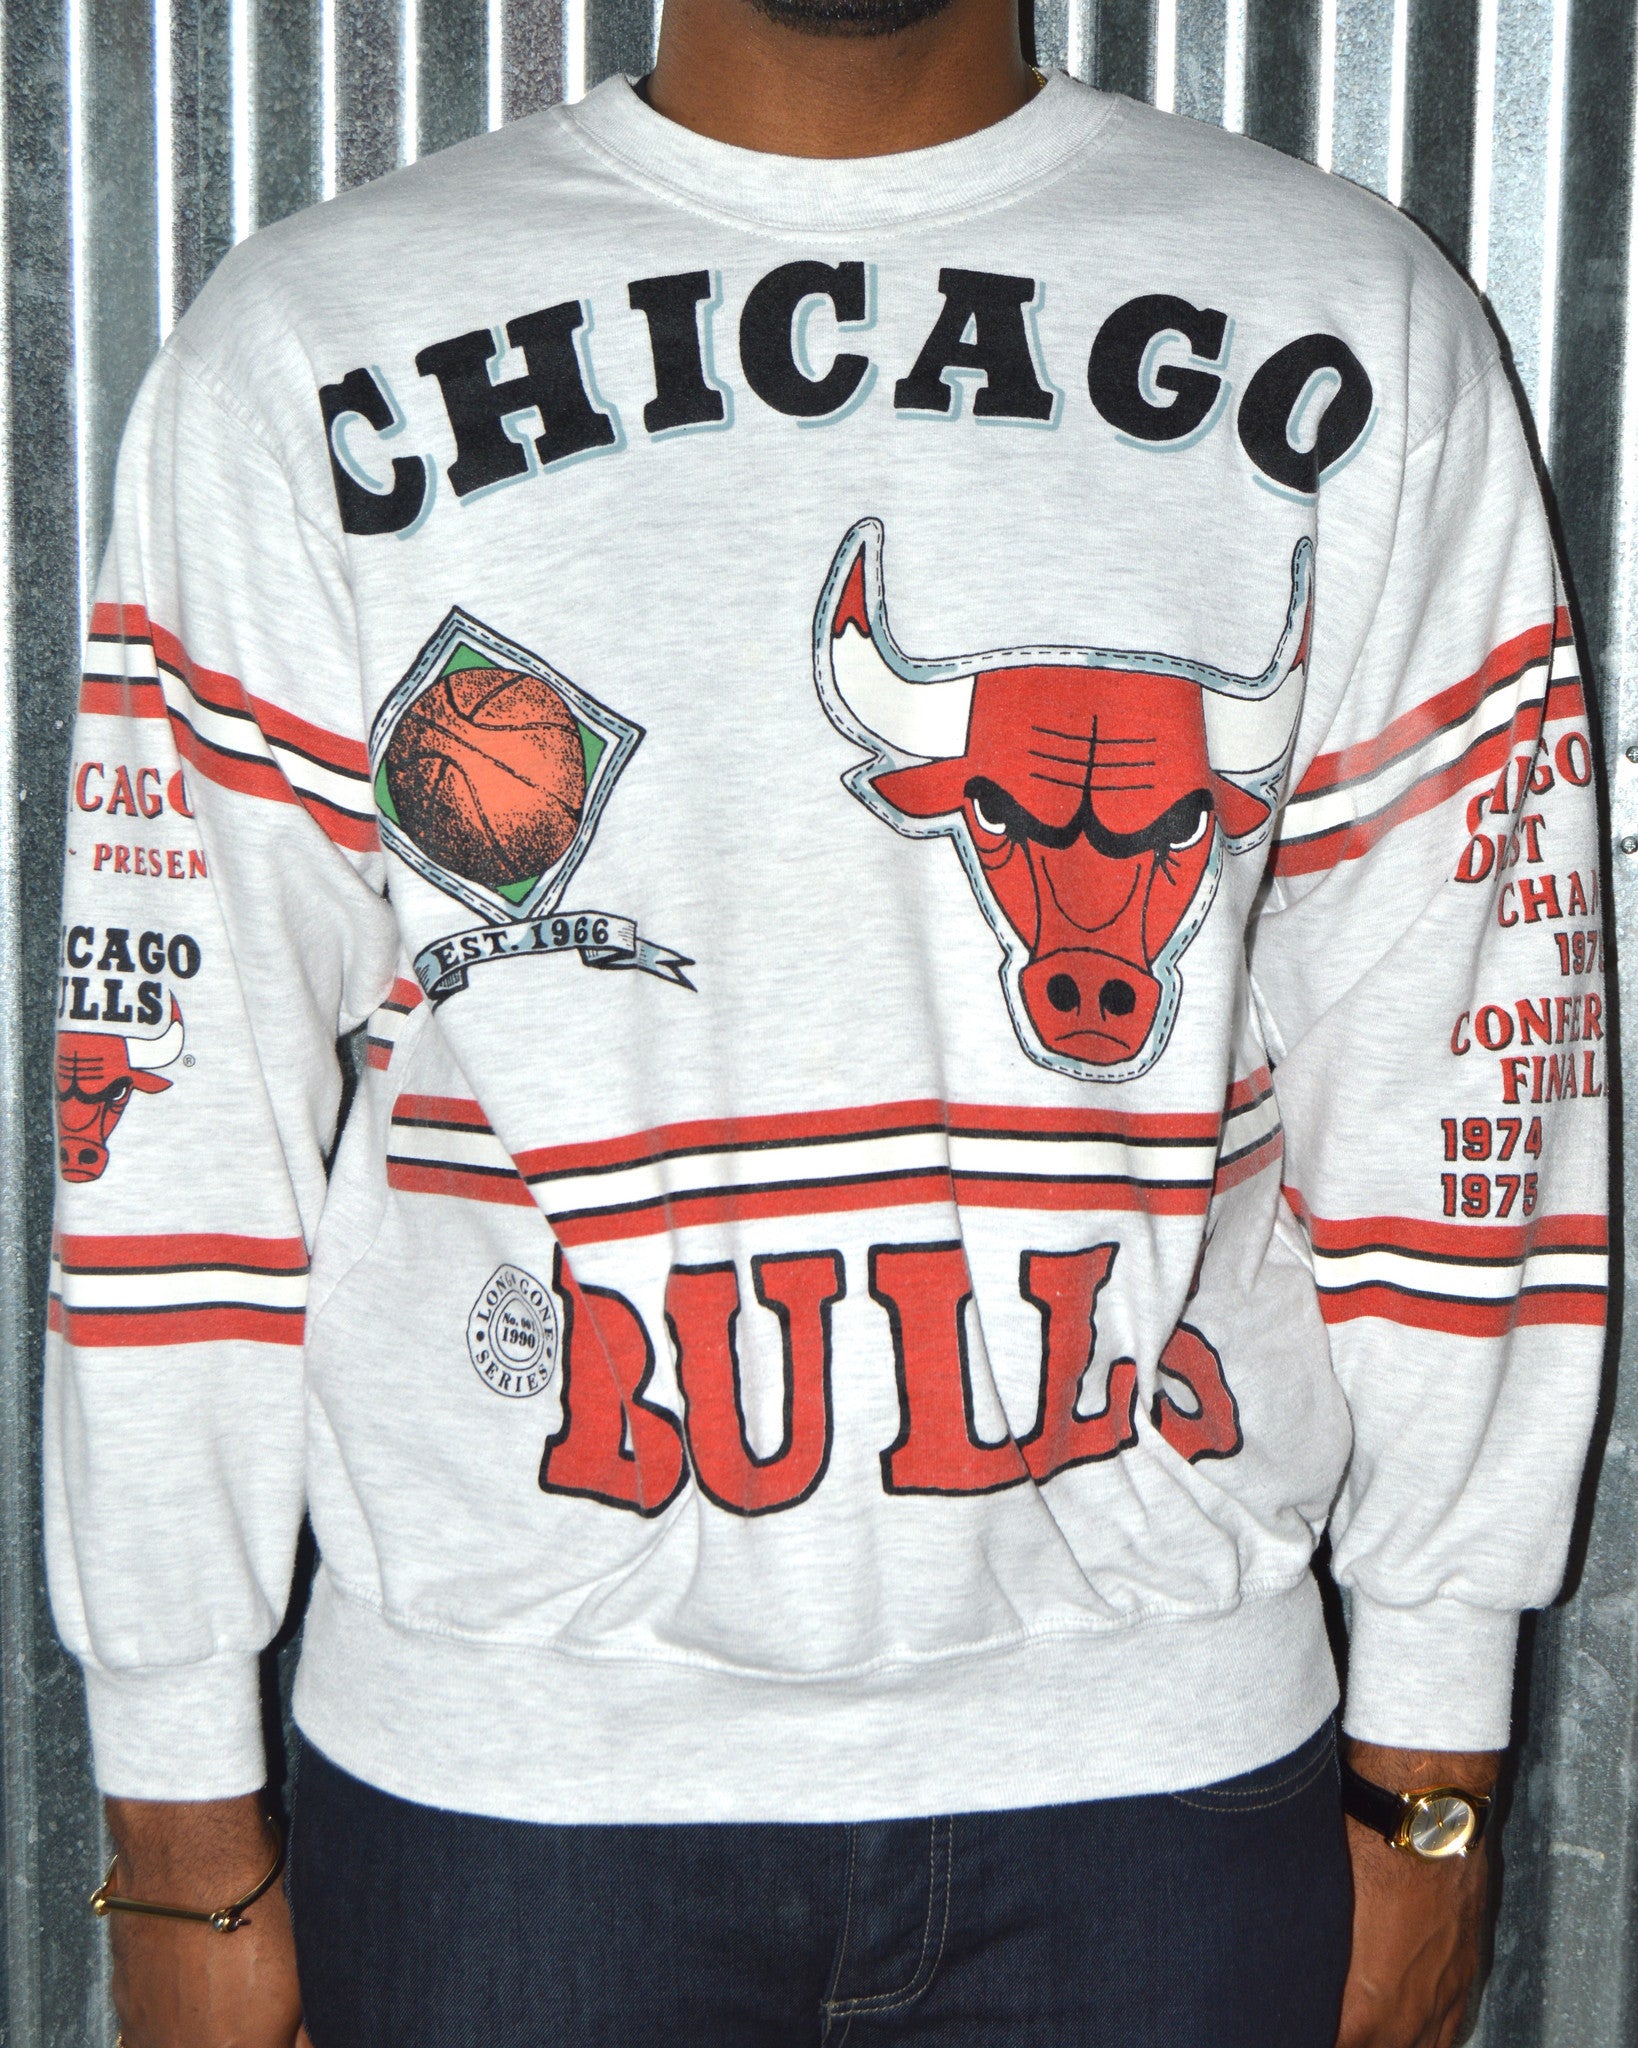 CHICAGO BULLS Sweatshirt 80s Vintage Stitched Sewn Nba 